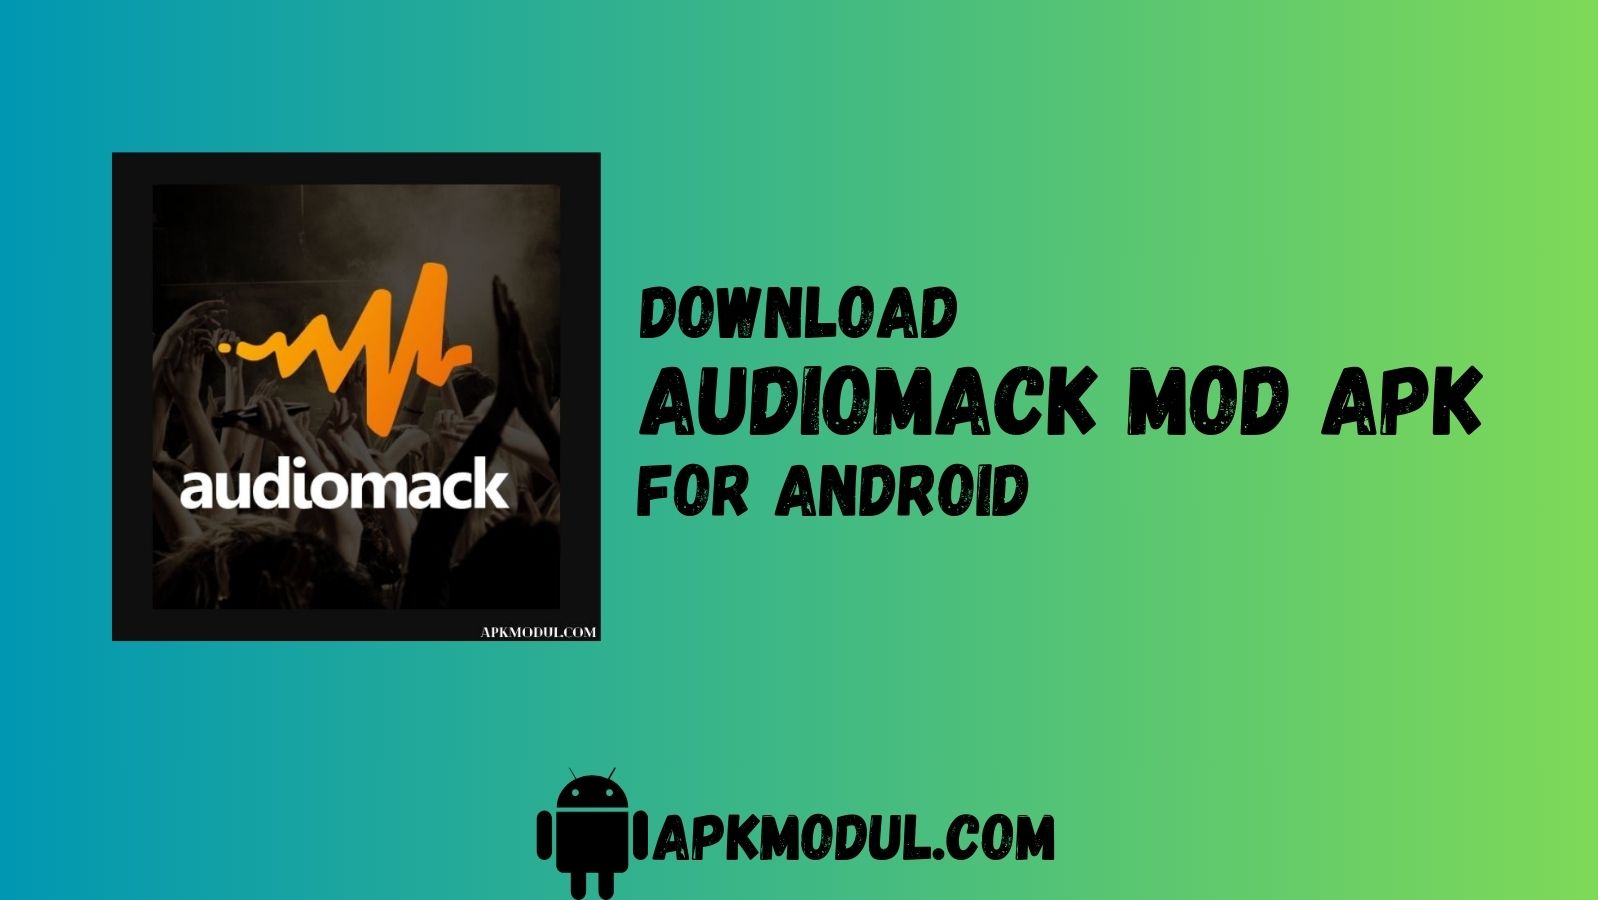 Audiomack MOD App